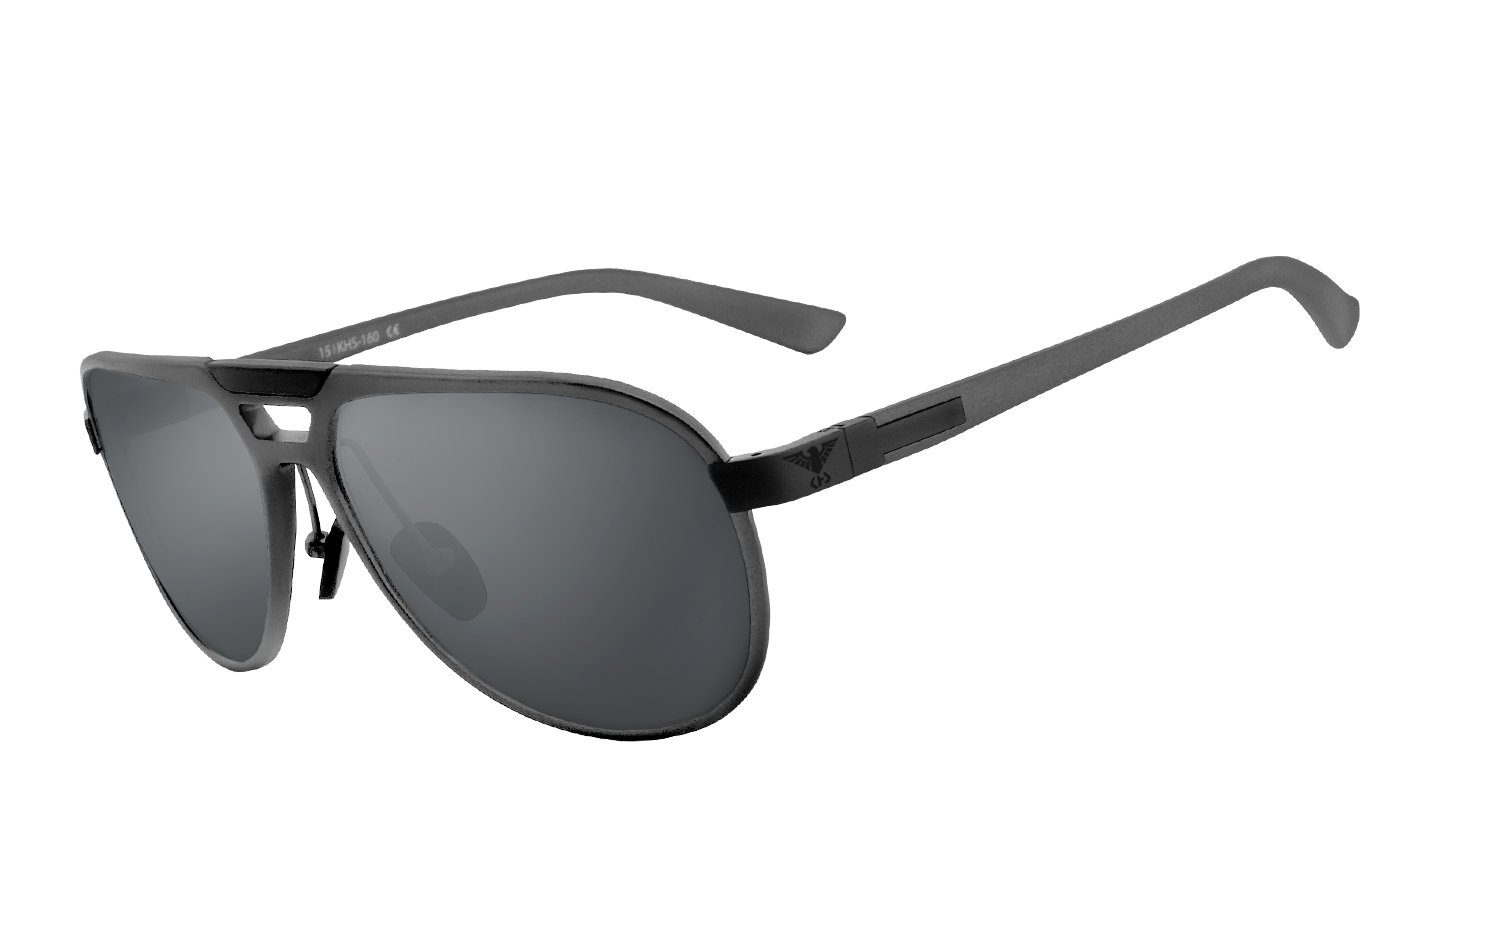 Sonnenbrille 160g KHS Qualitätsgläser HLT®